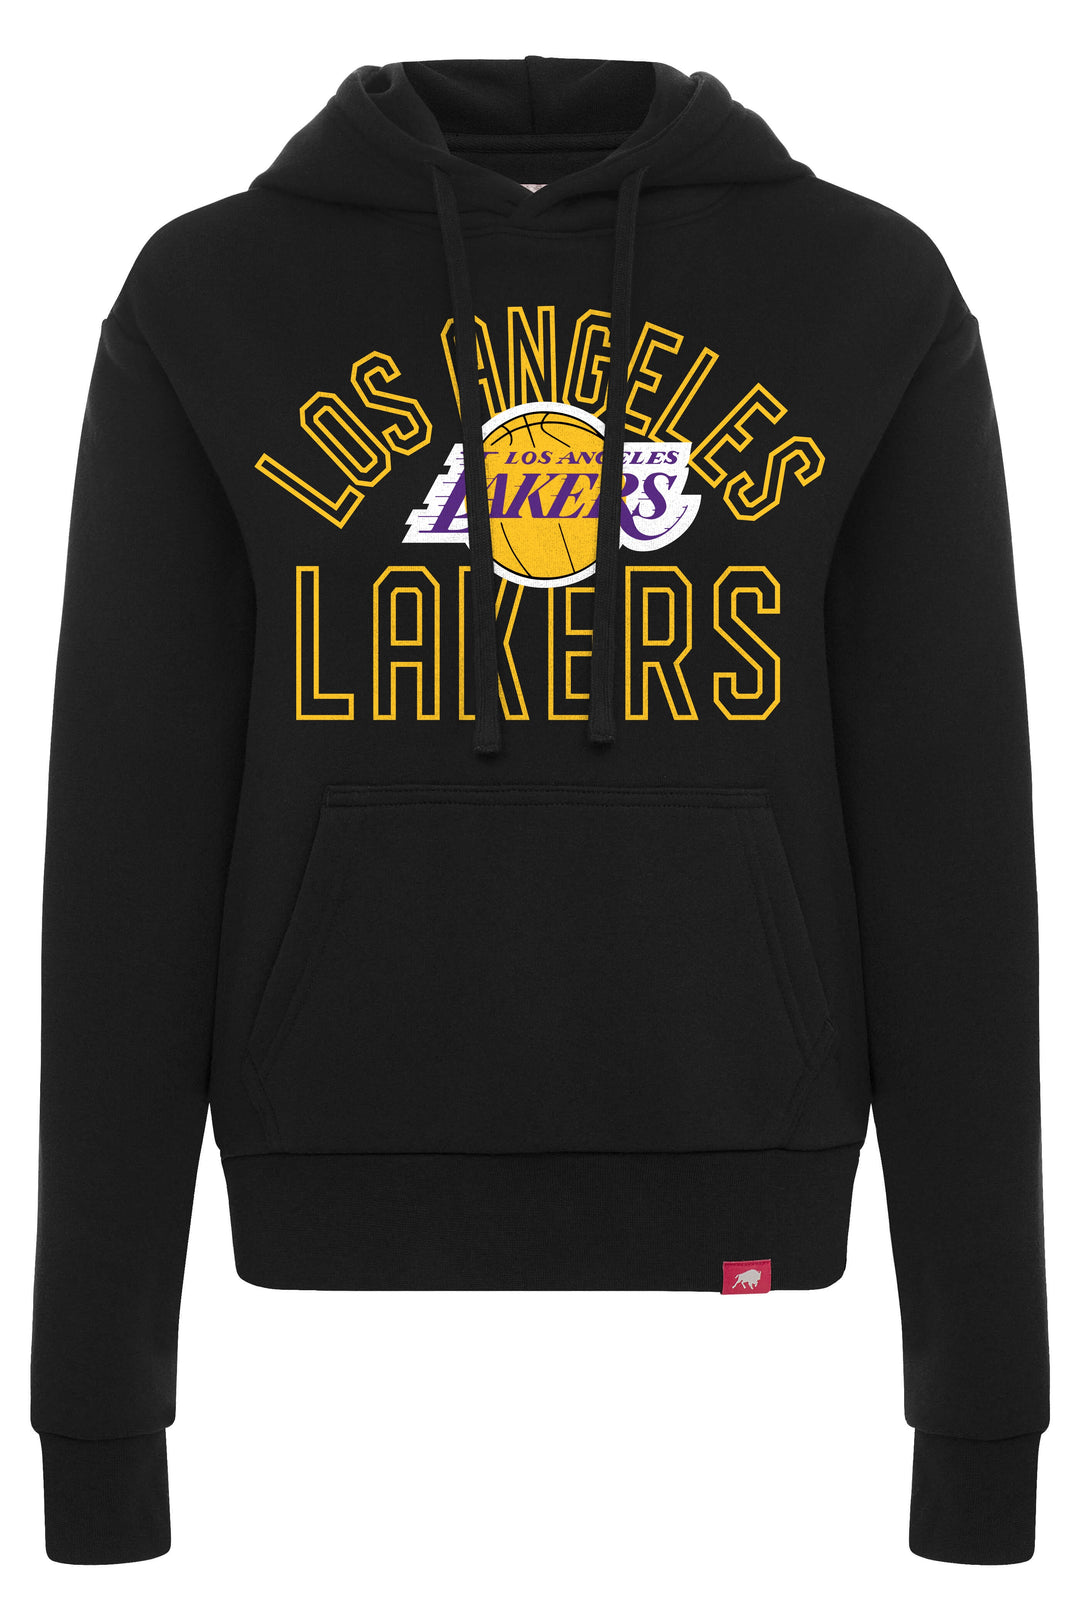 Los Angeles Lakers Ava Gates Women's Hoodie